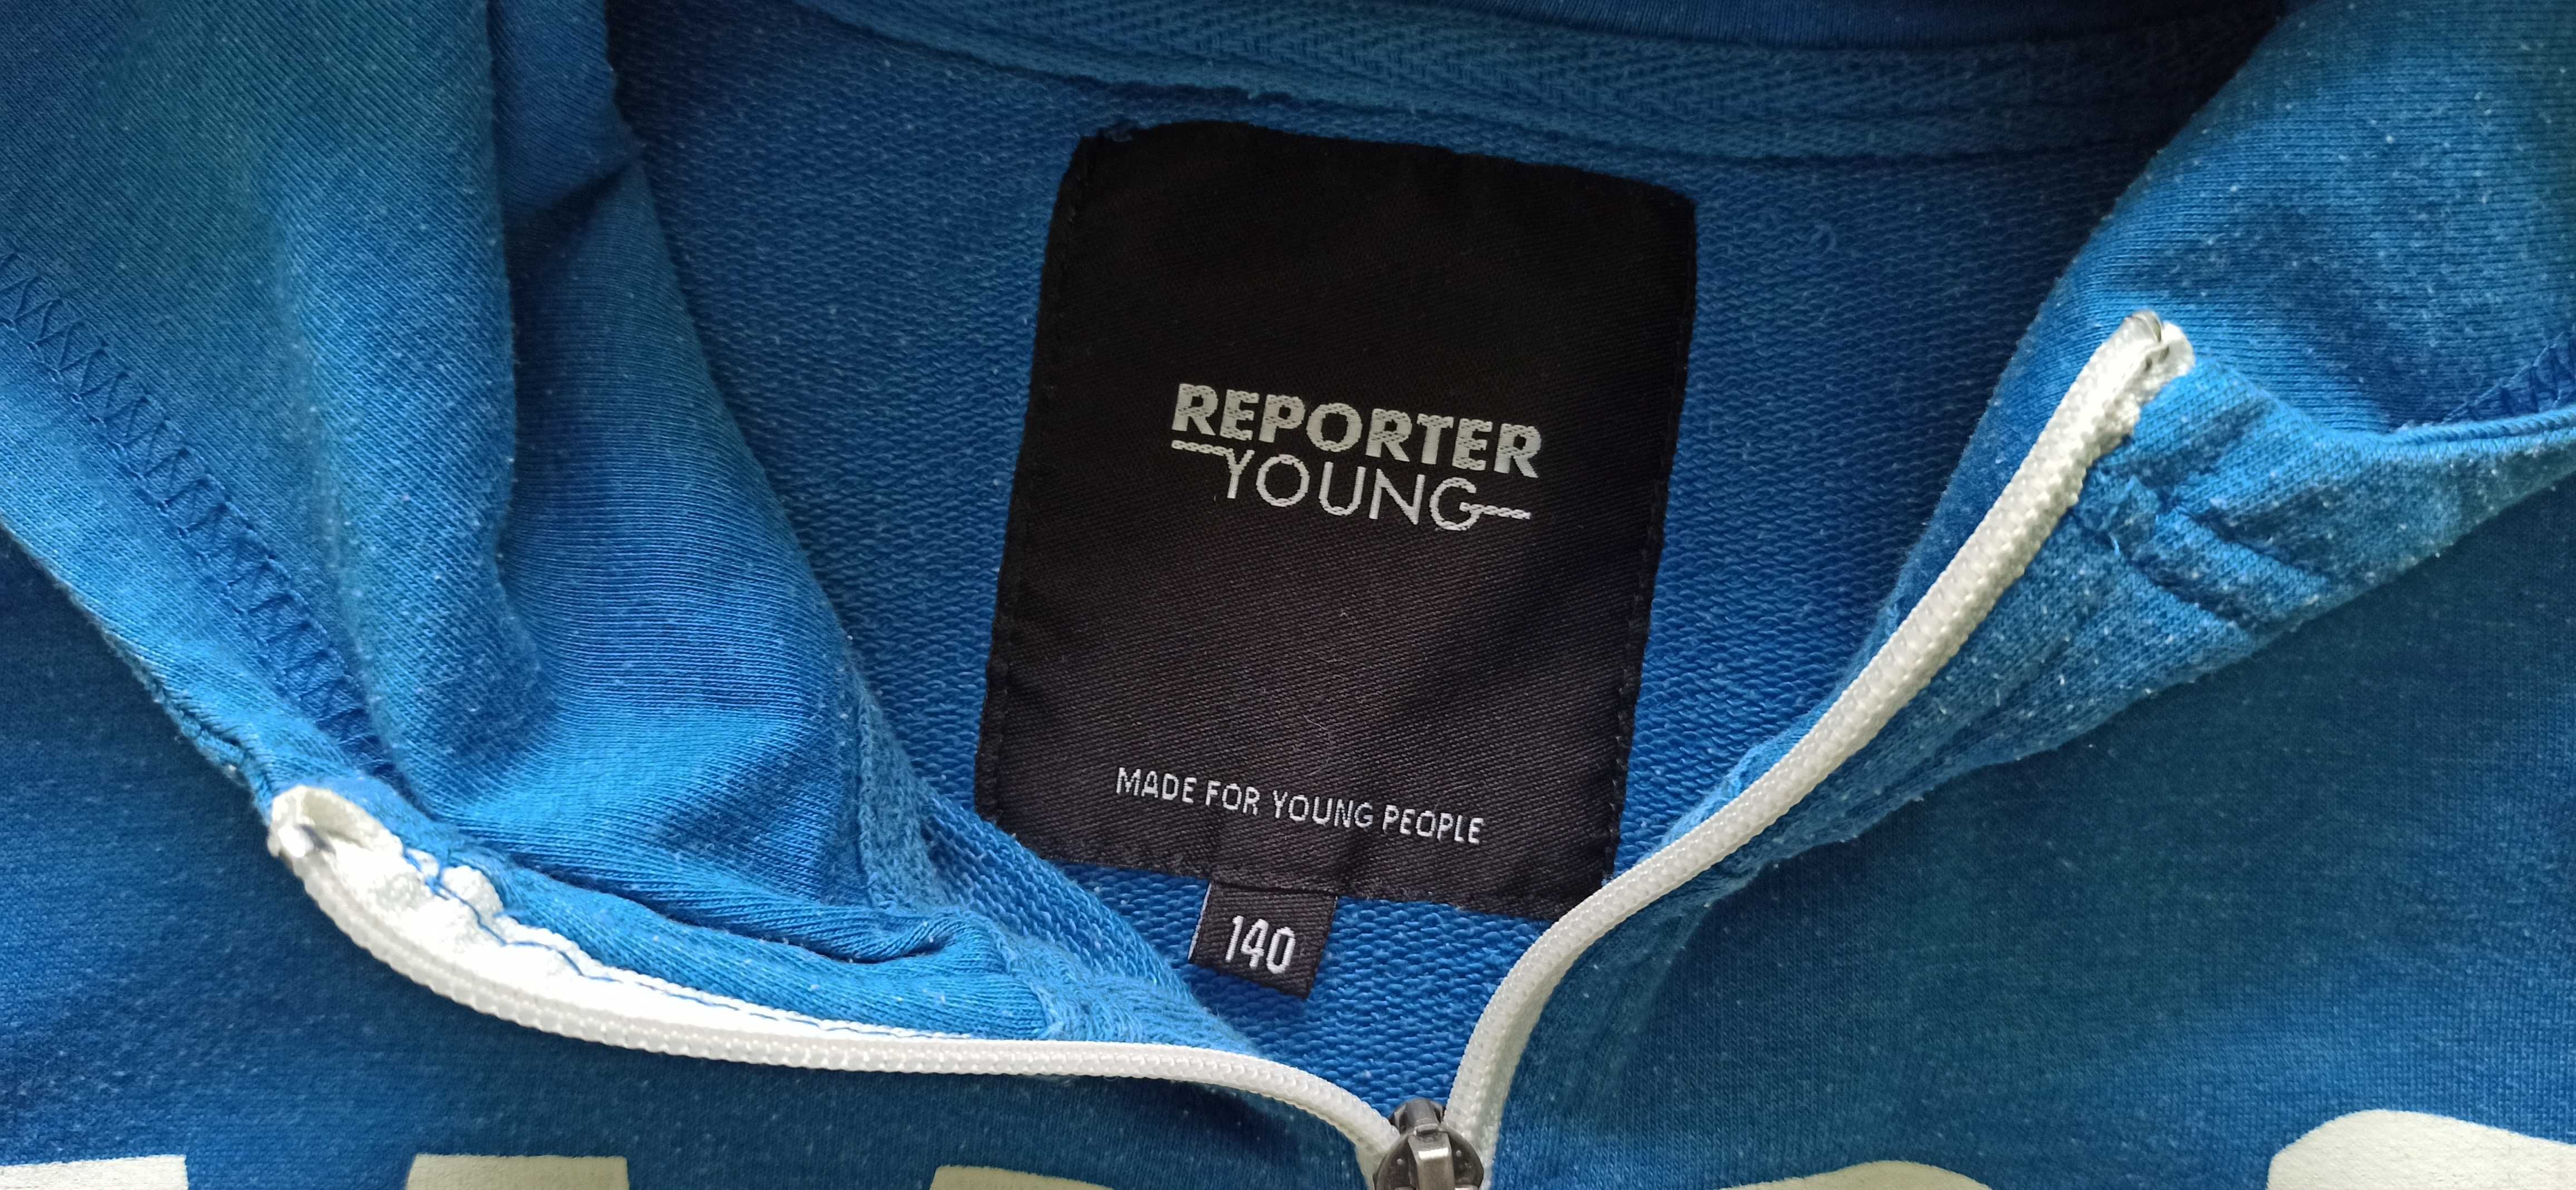 Bluza Reporter Young 140 bdb niebieska kaptur nadruk ryba w kieszeni